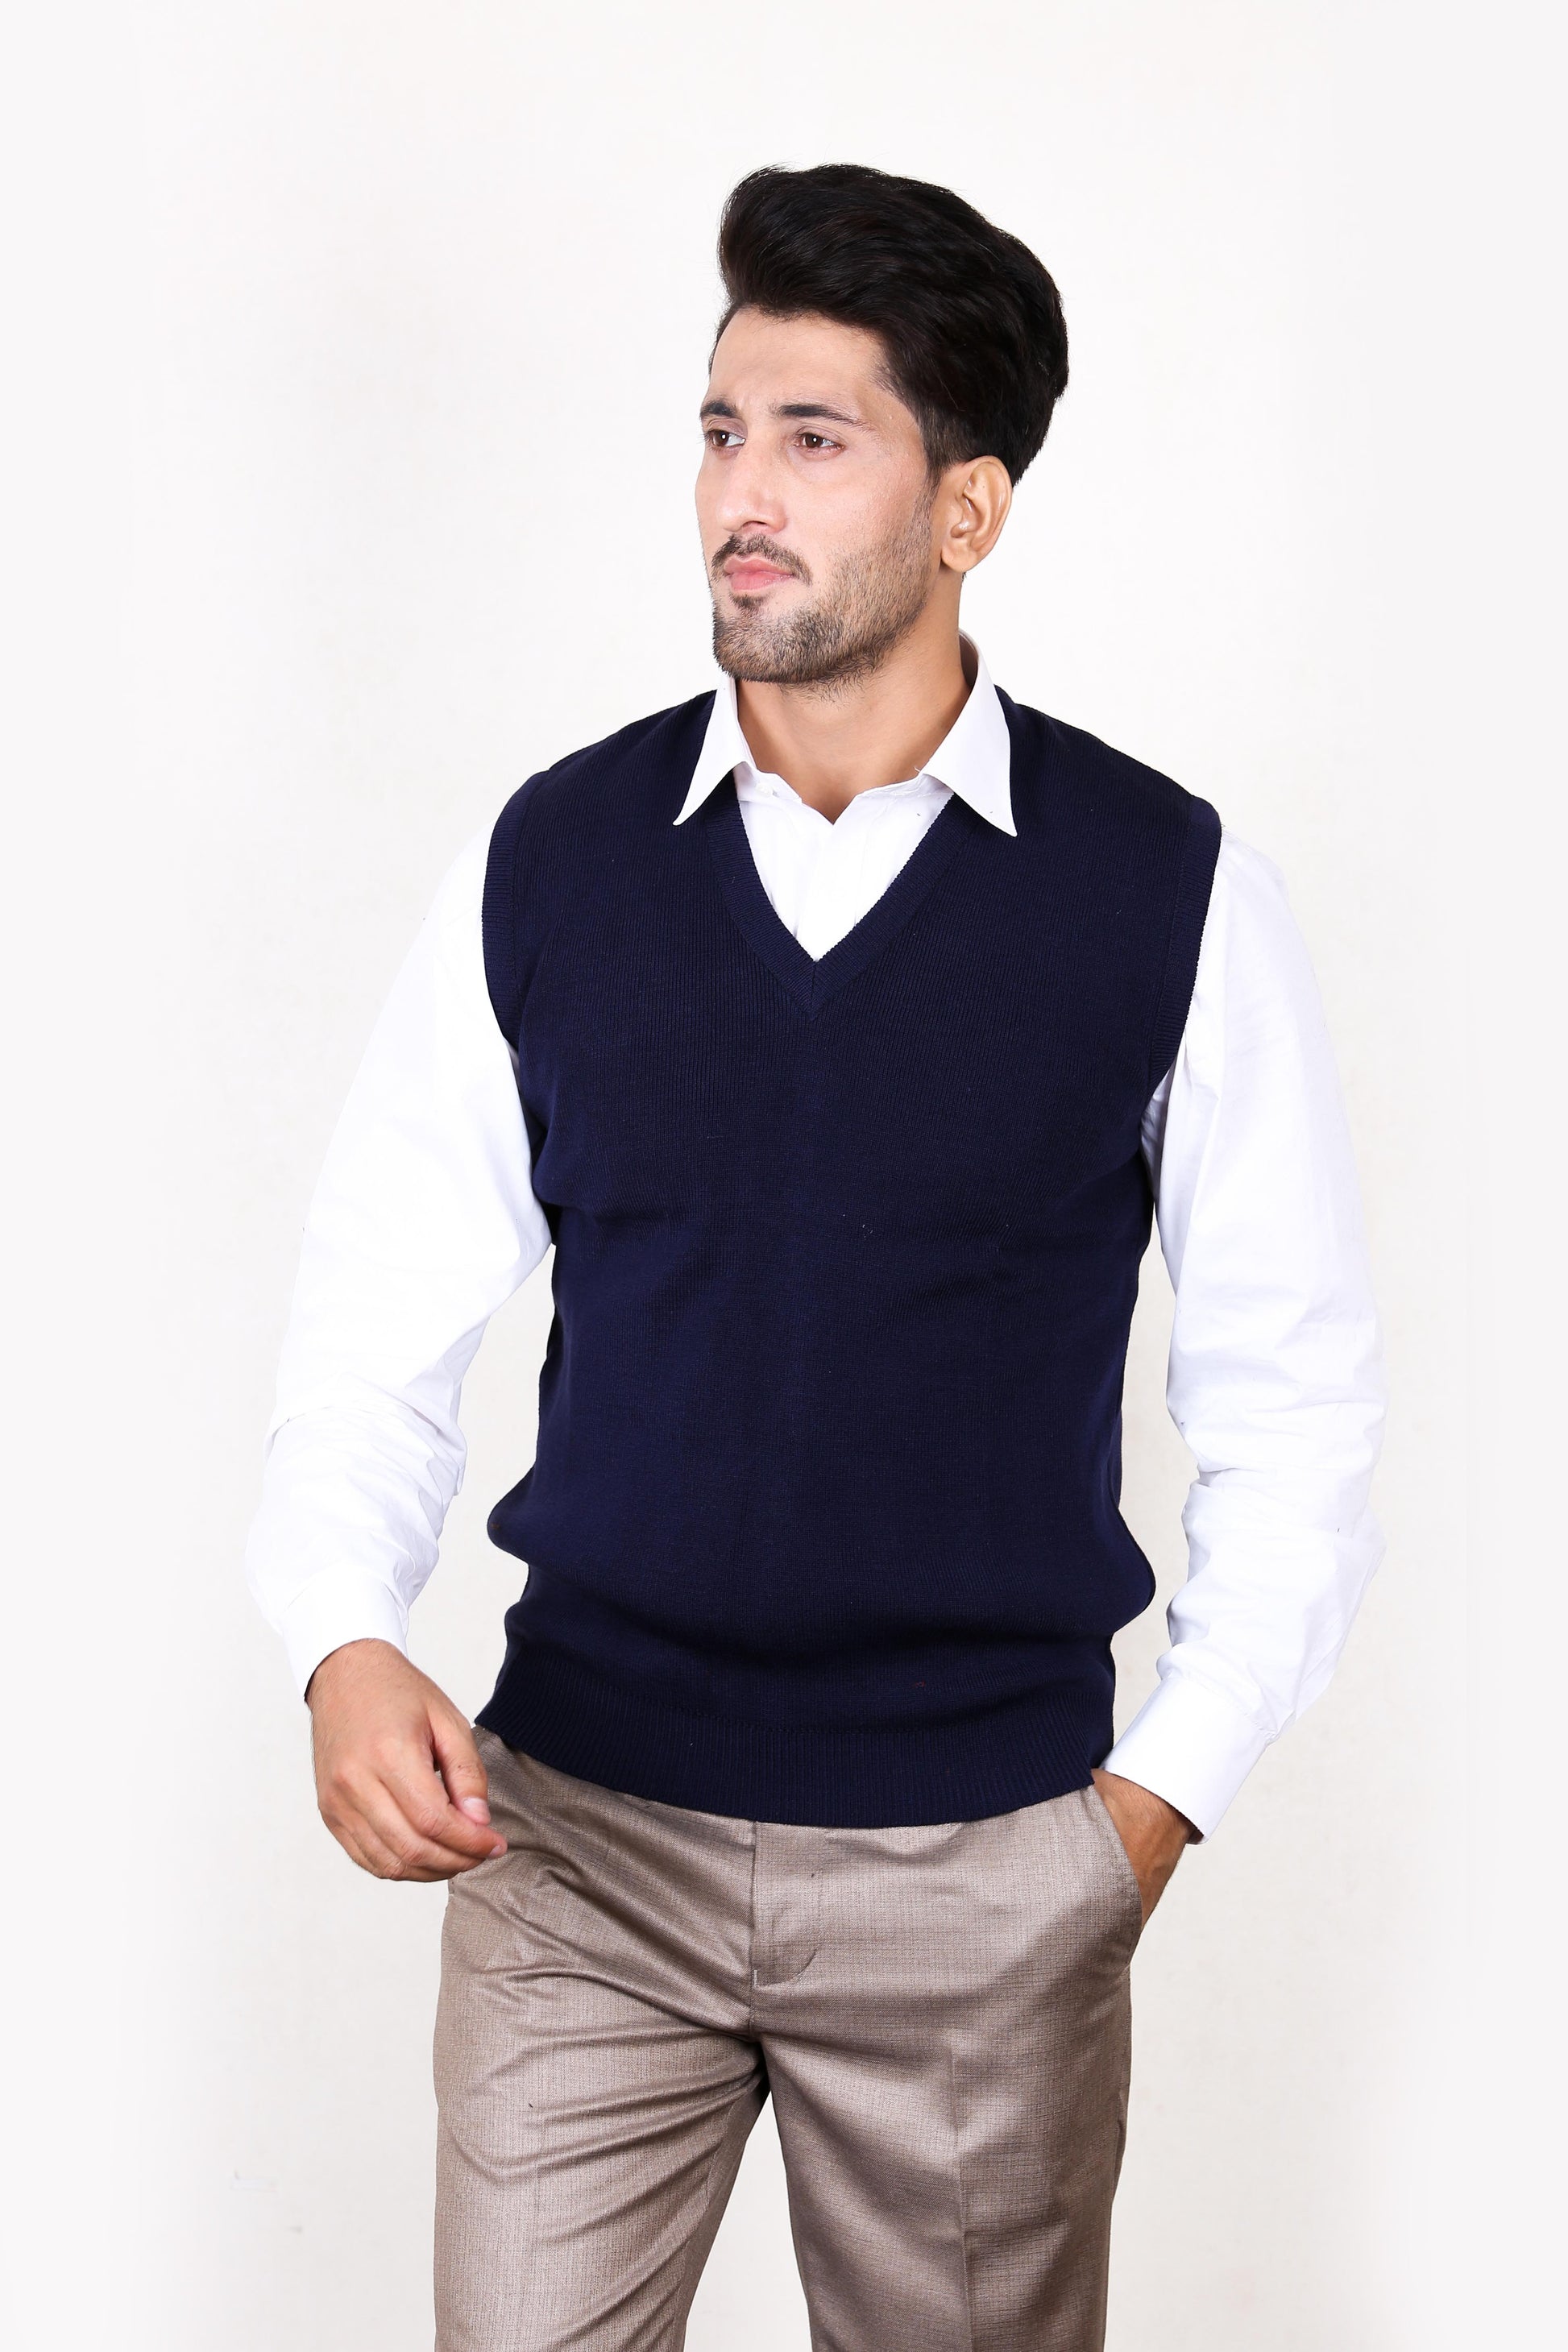 S.H Sleeveless Plain Sweater for Men Dark Blue – The Cut Price